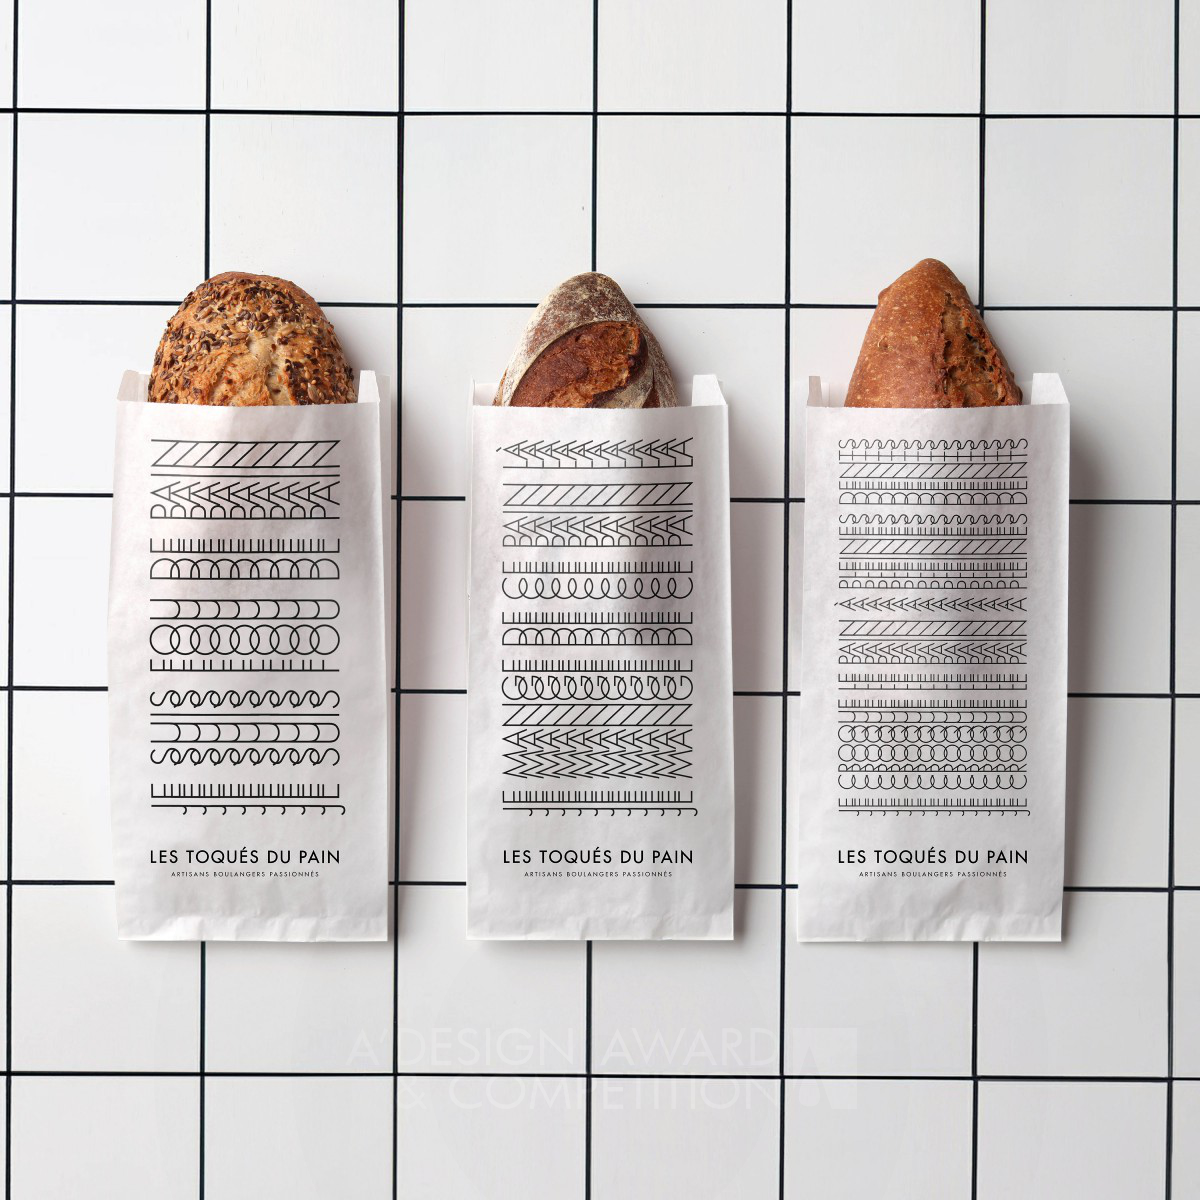 Les Bons Faiseurs Visual Identity for a bakery